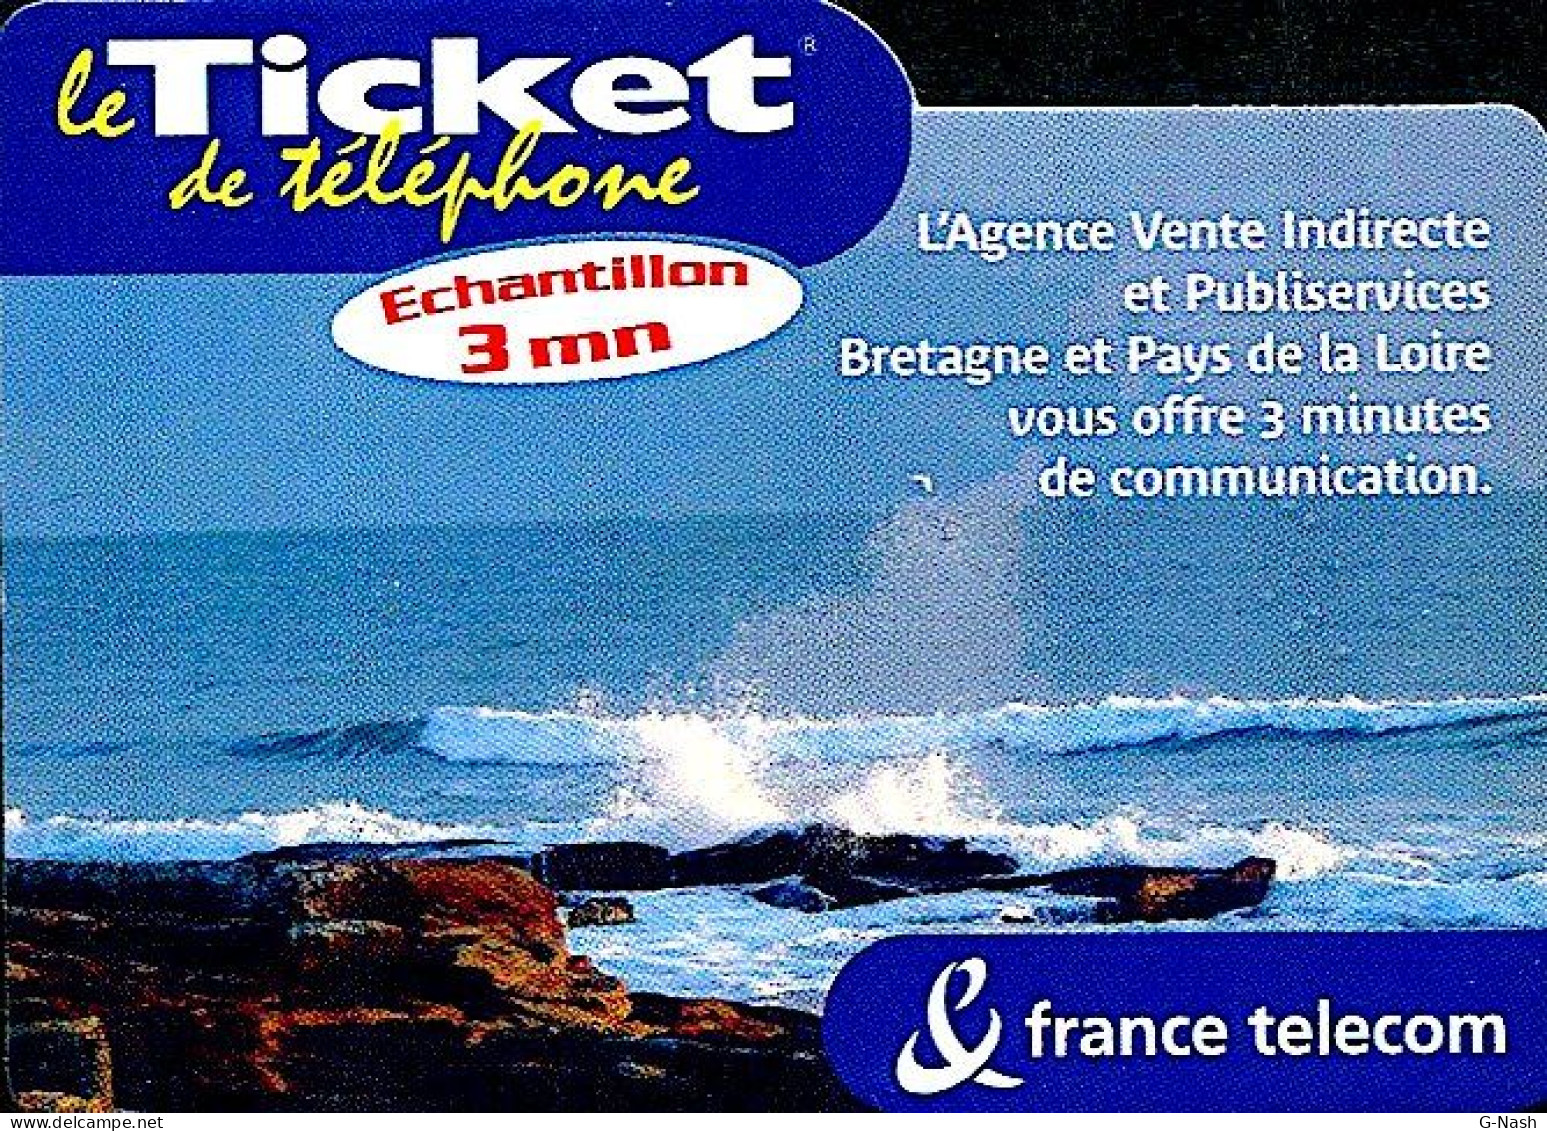 Ticket Téléphone - 07/03/2004 – Bretagne Te Pays De Loire  3mn - FT Tickets